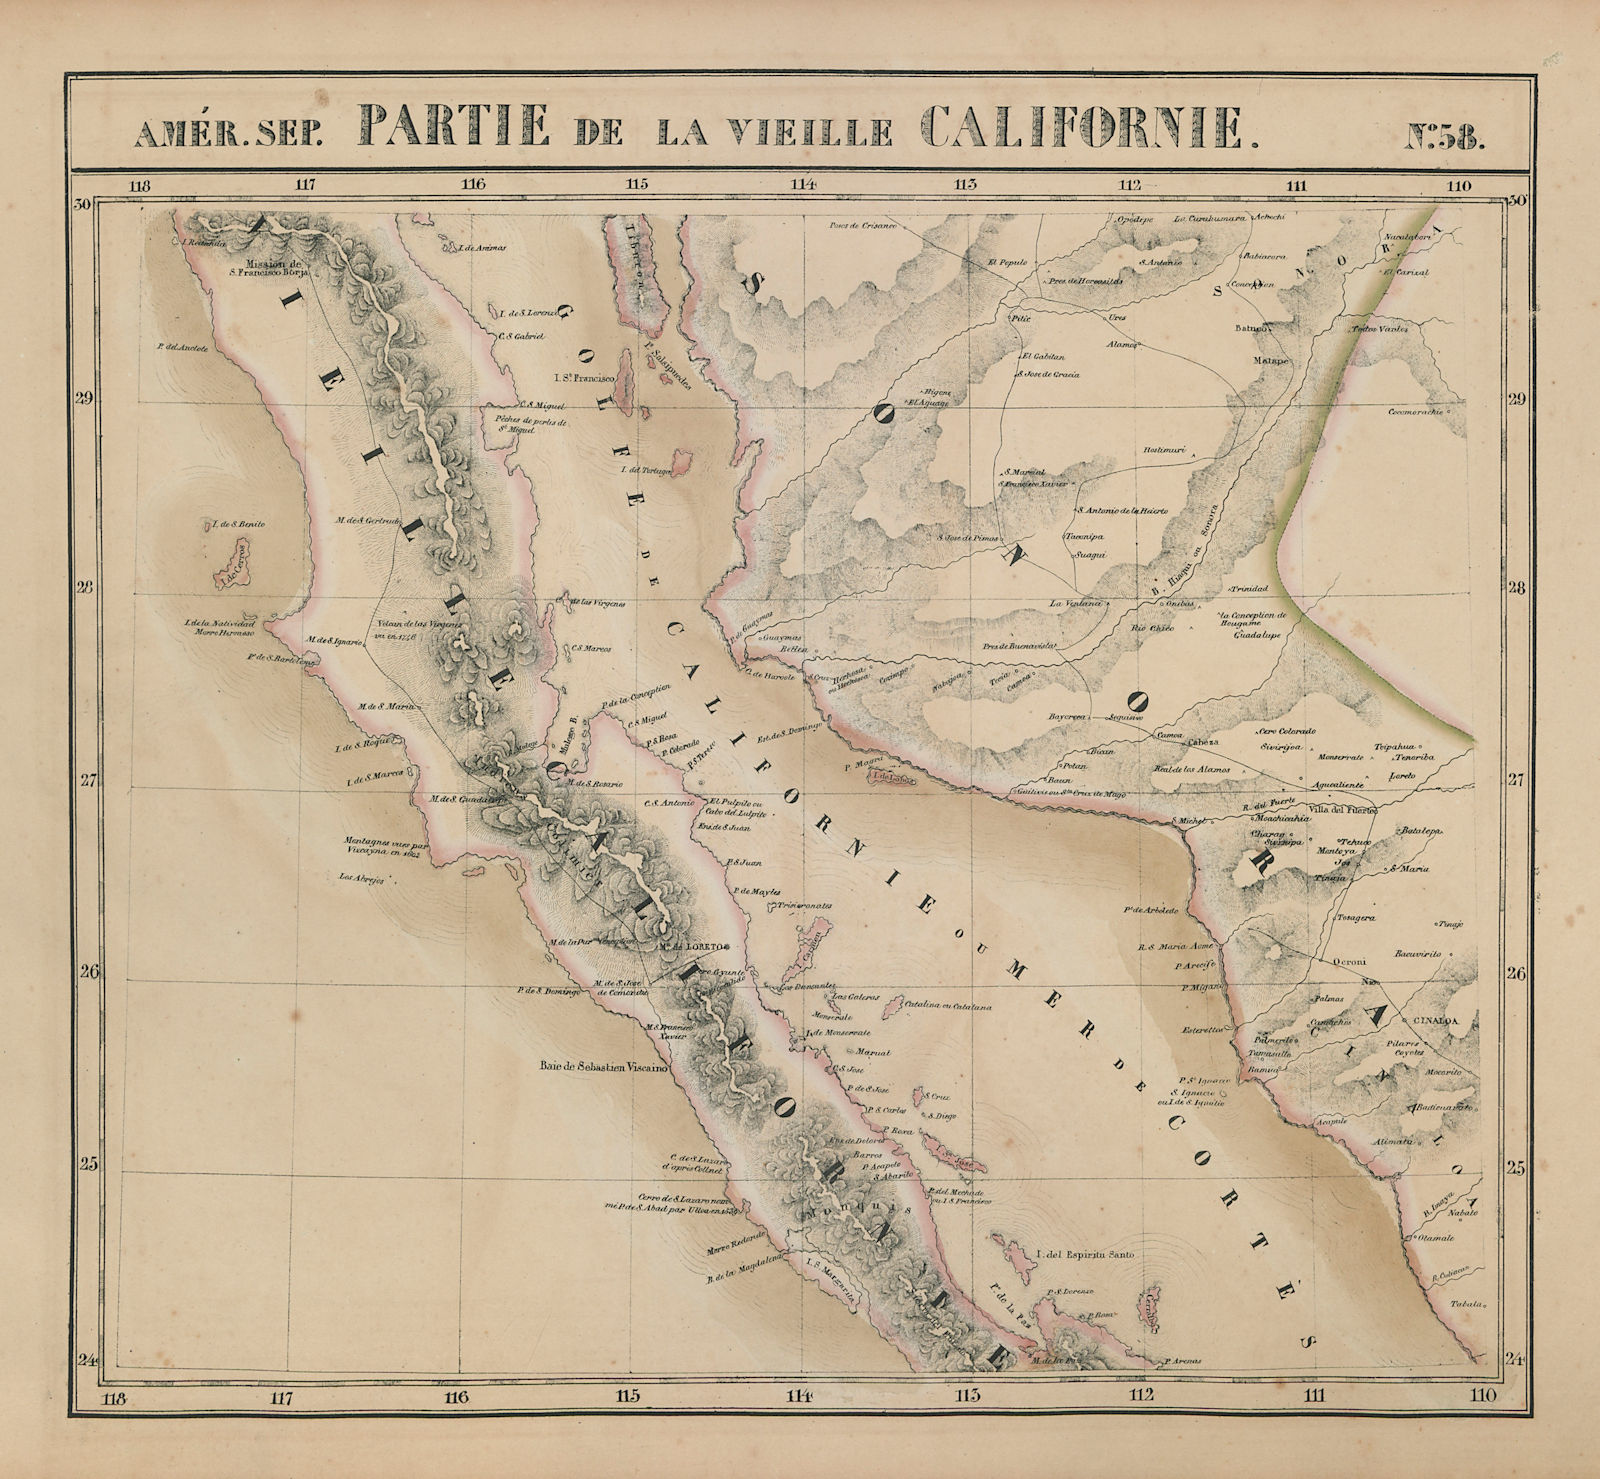 Amér Sep Partie de la Vielle Californie 58 Baja California VANDERMAELEN 1827 map